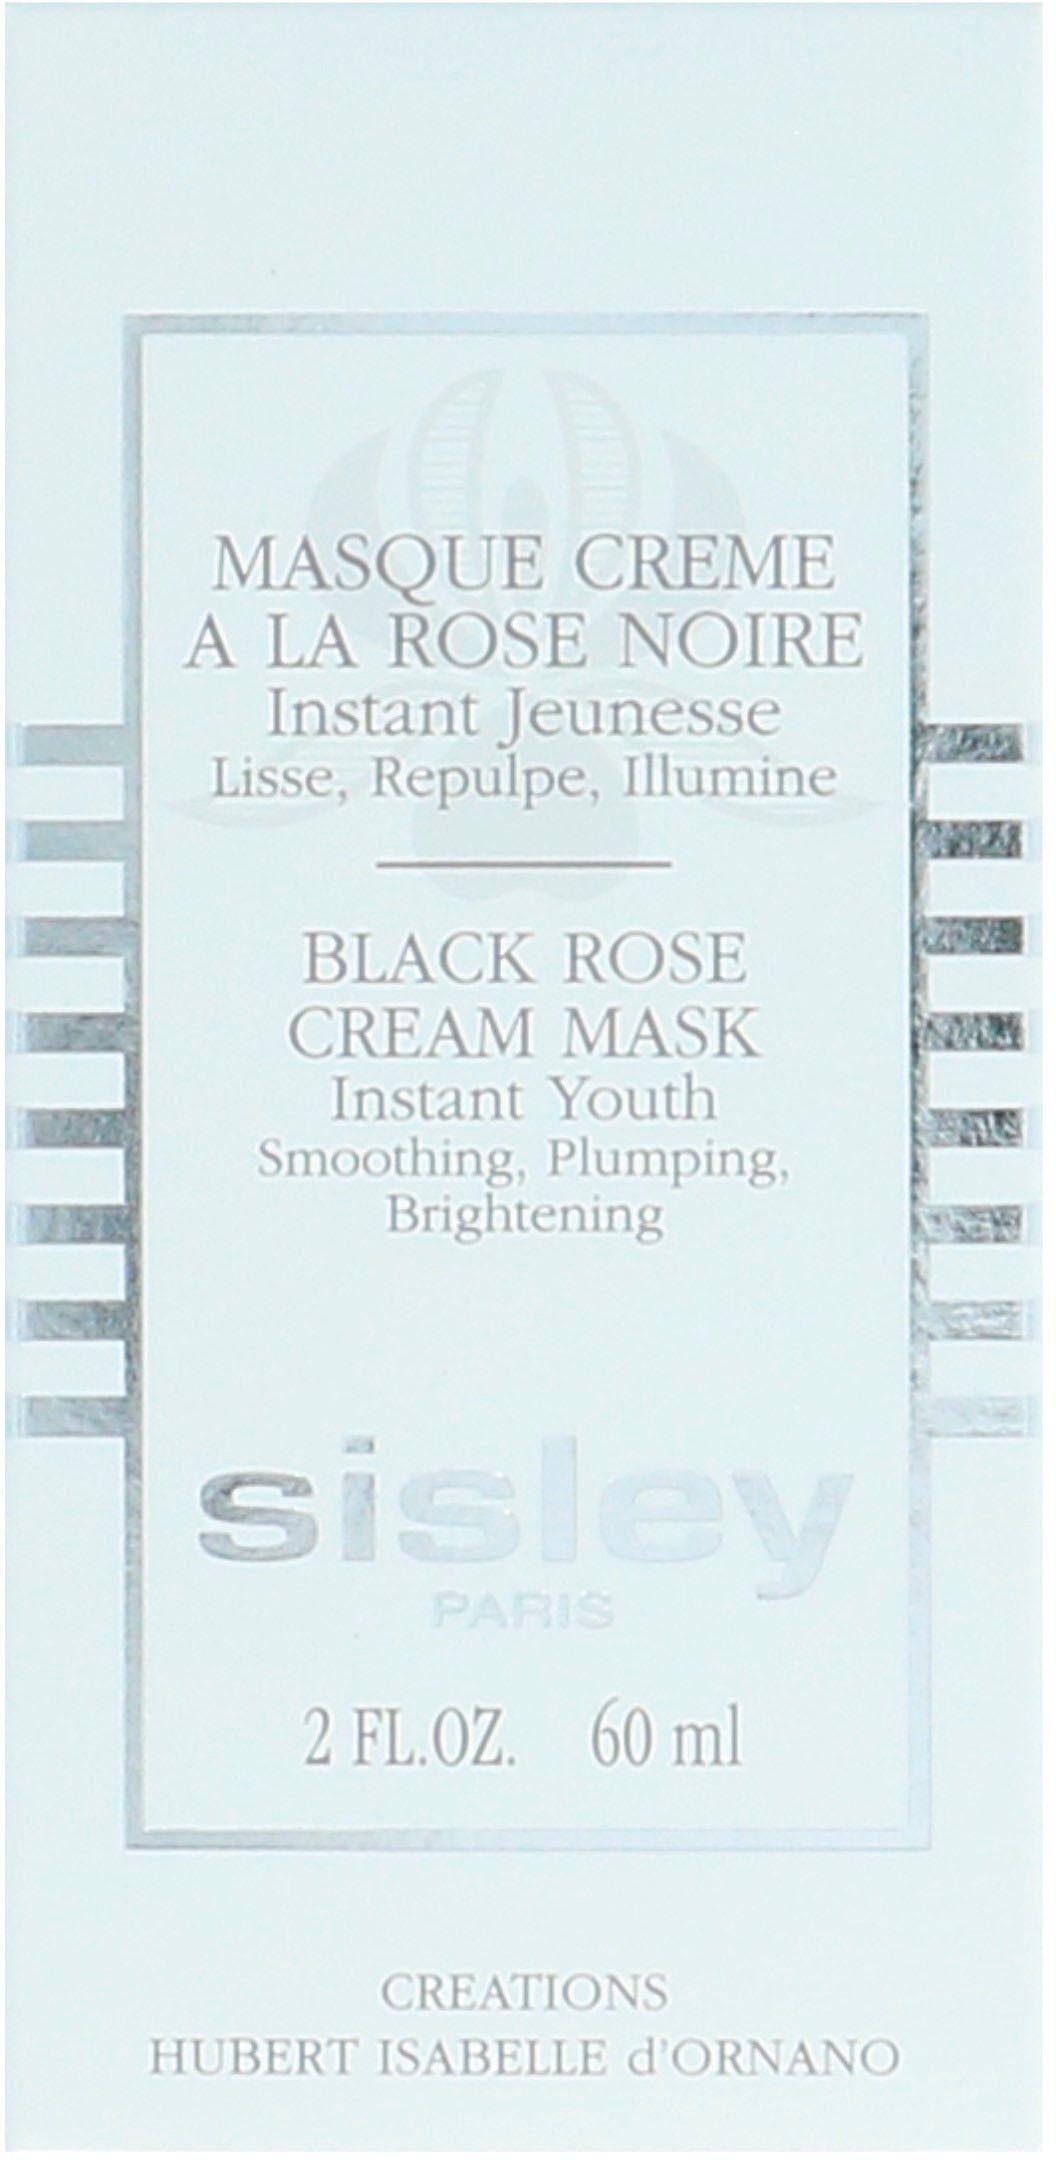 Cream Rose sisley Black Mask Gesichtsmaske